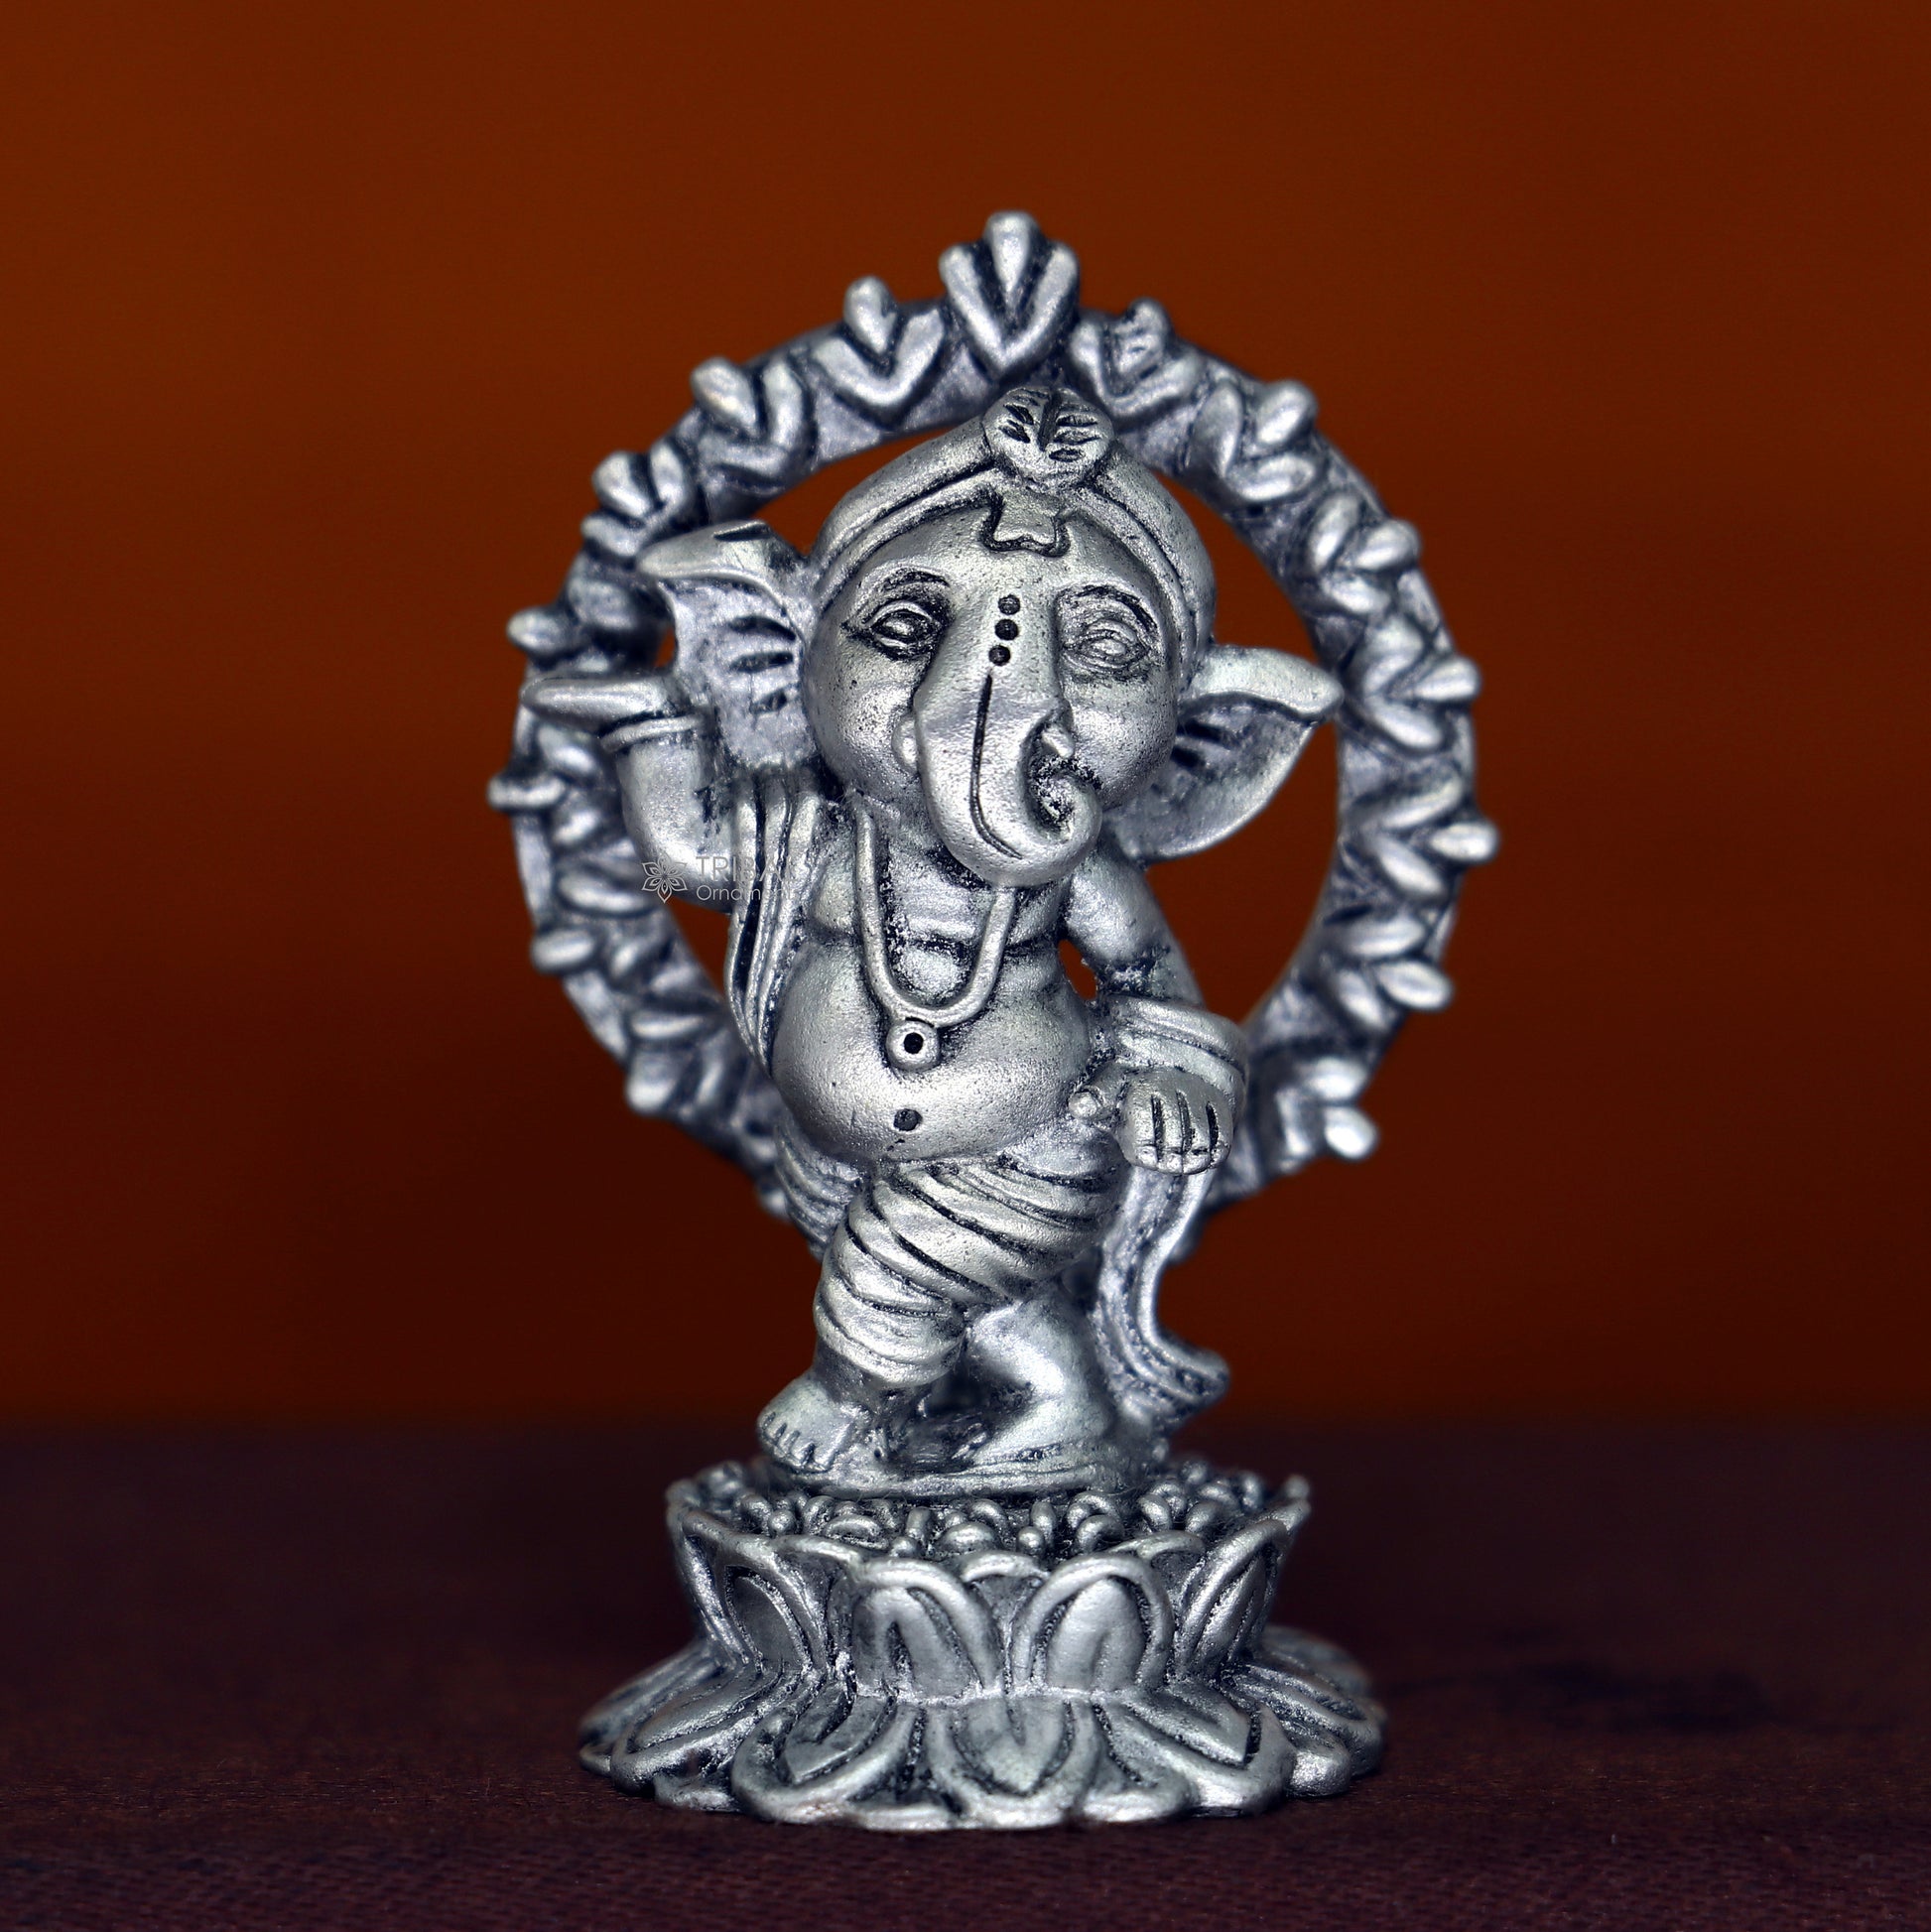 1.7"  925 Sterling silver handmade Hindu God Idol Ganesha statue, puja article figurine, home decor Diwali puja Divine silver article art680 - TRIBAL ORNAMENTS